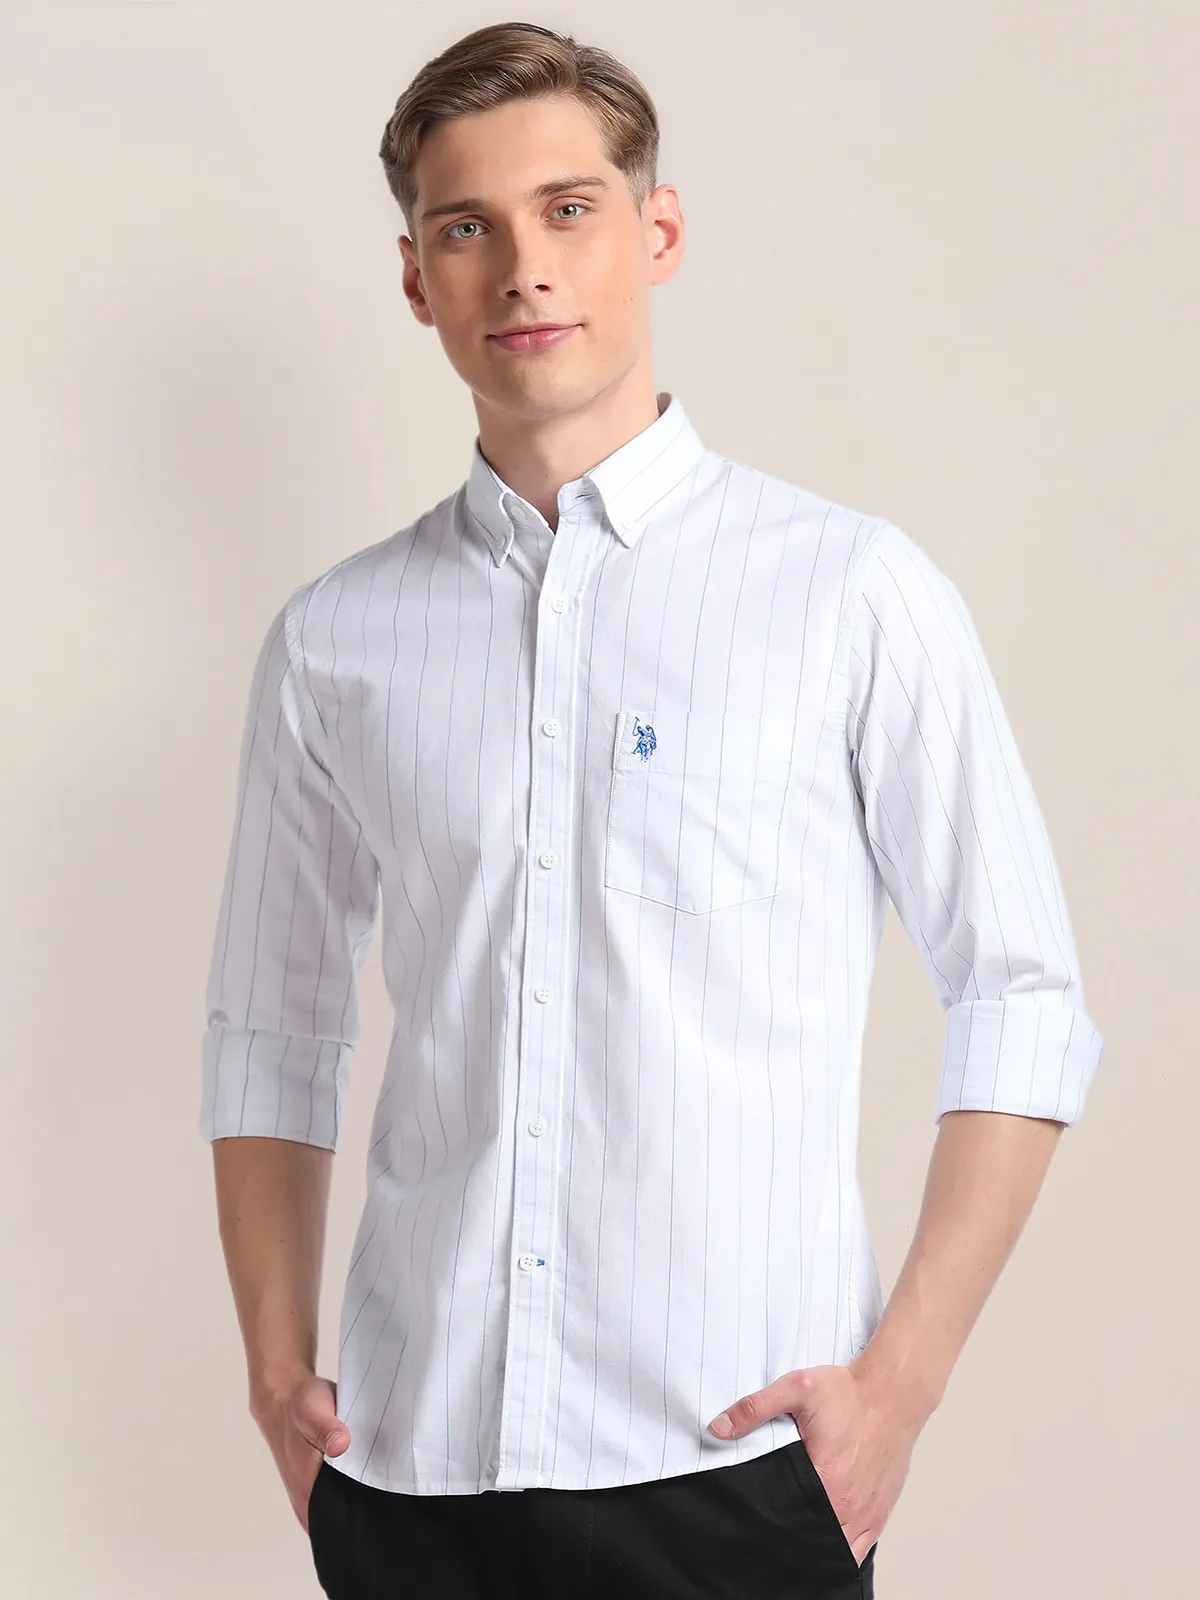 U S POLO ASSN white and blue stripe cotton shirt